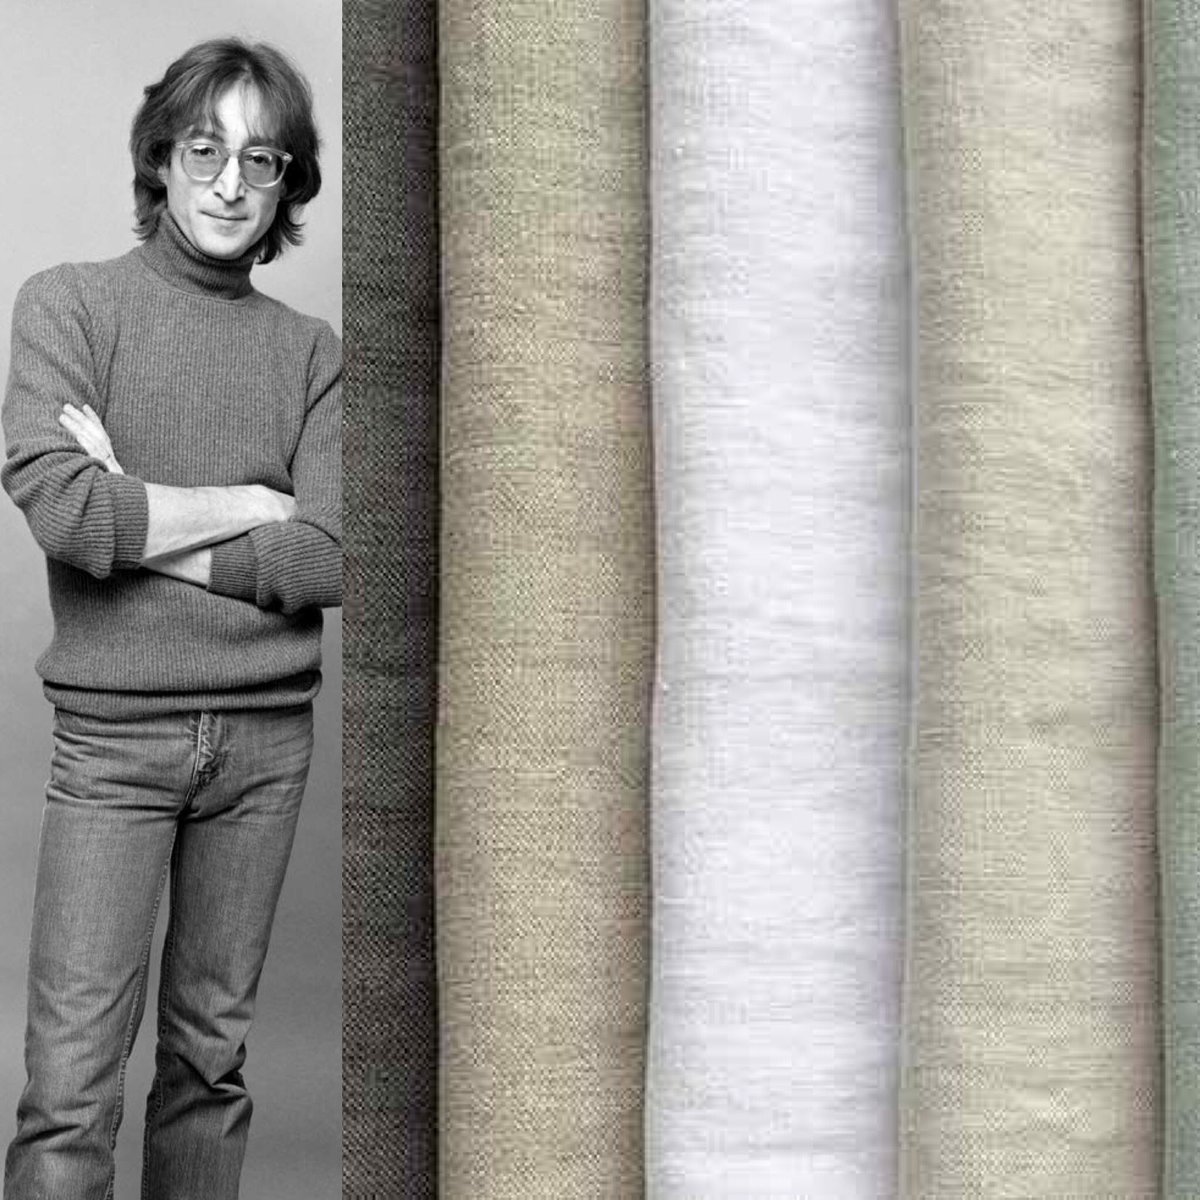 Happy #TextilesDay! What’s your #textiles name? I’m John Linen
.
.
.
@johnlennon #johnlennon @thebeatles #thebeatles #Beatles #linens #linen #textile #NationalTextilesDay